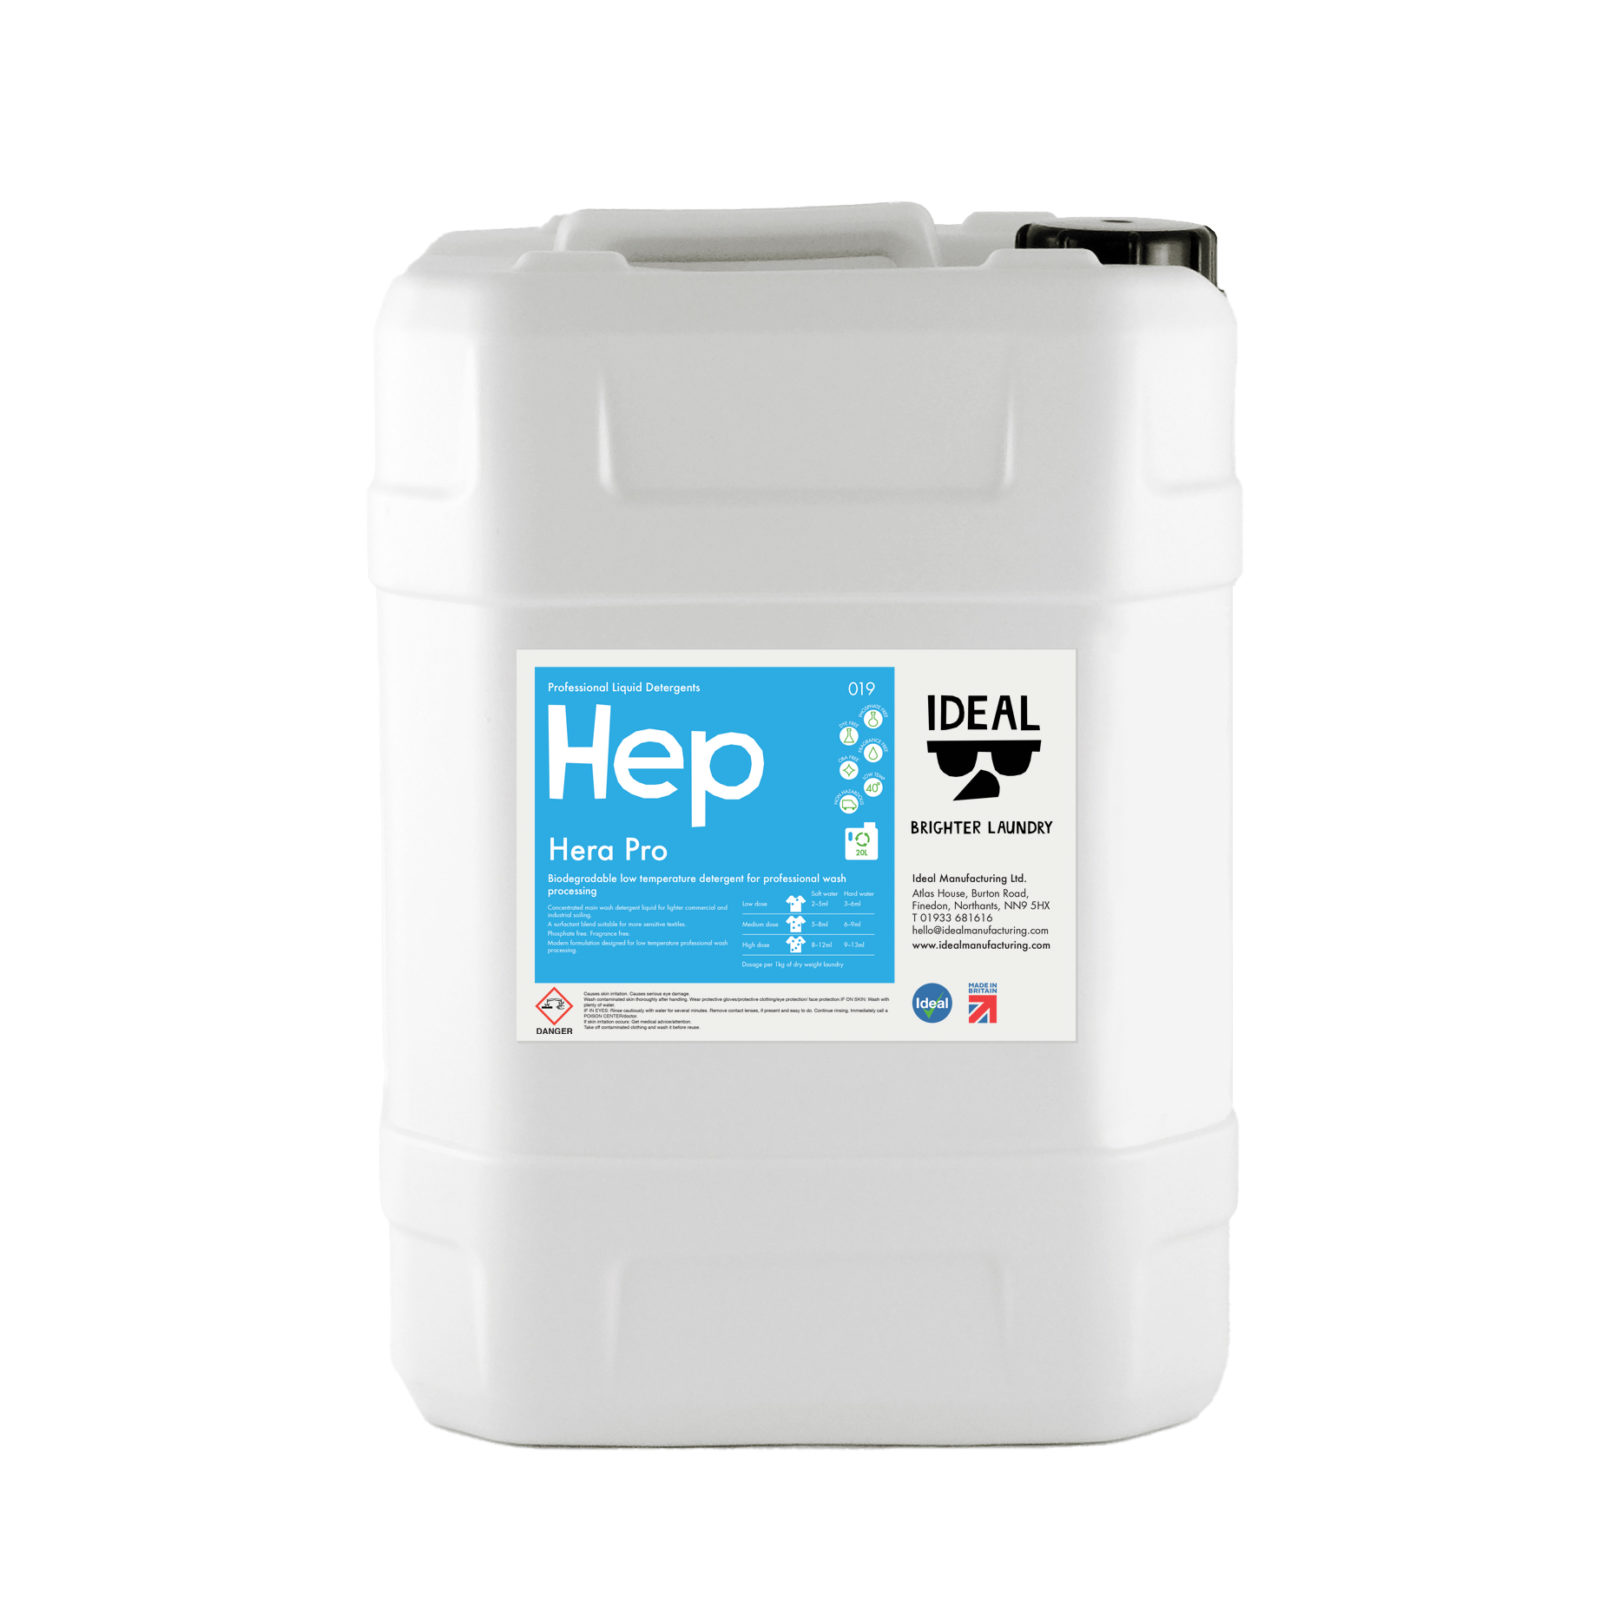 Hera Pro (Hep) – Ideal Manufacturing